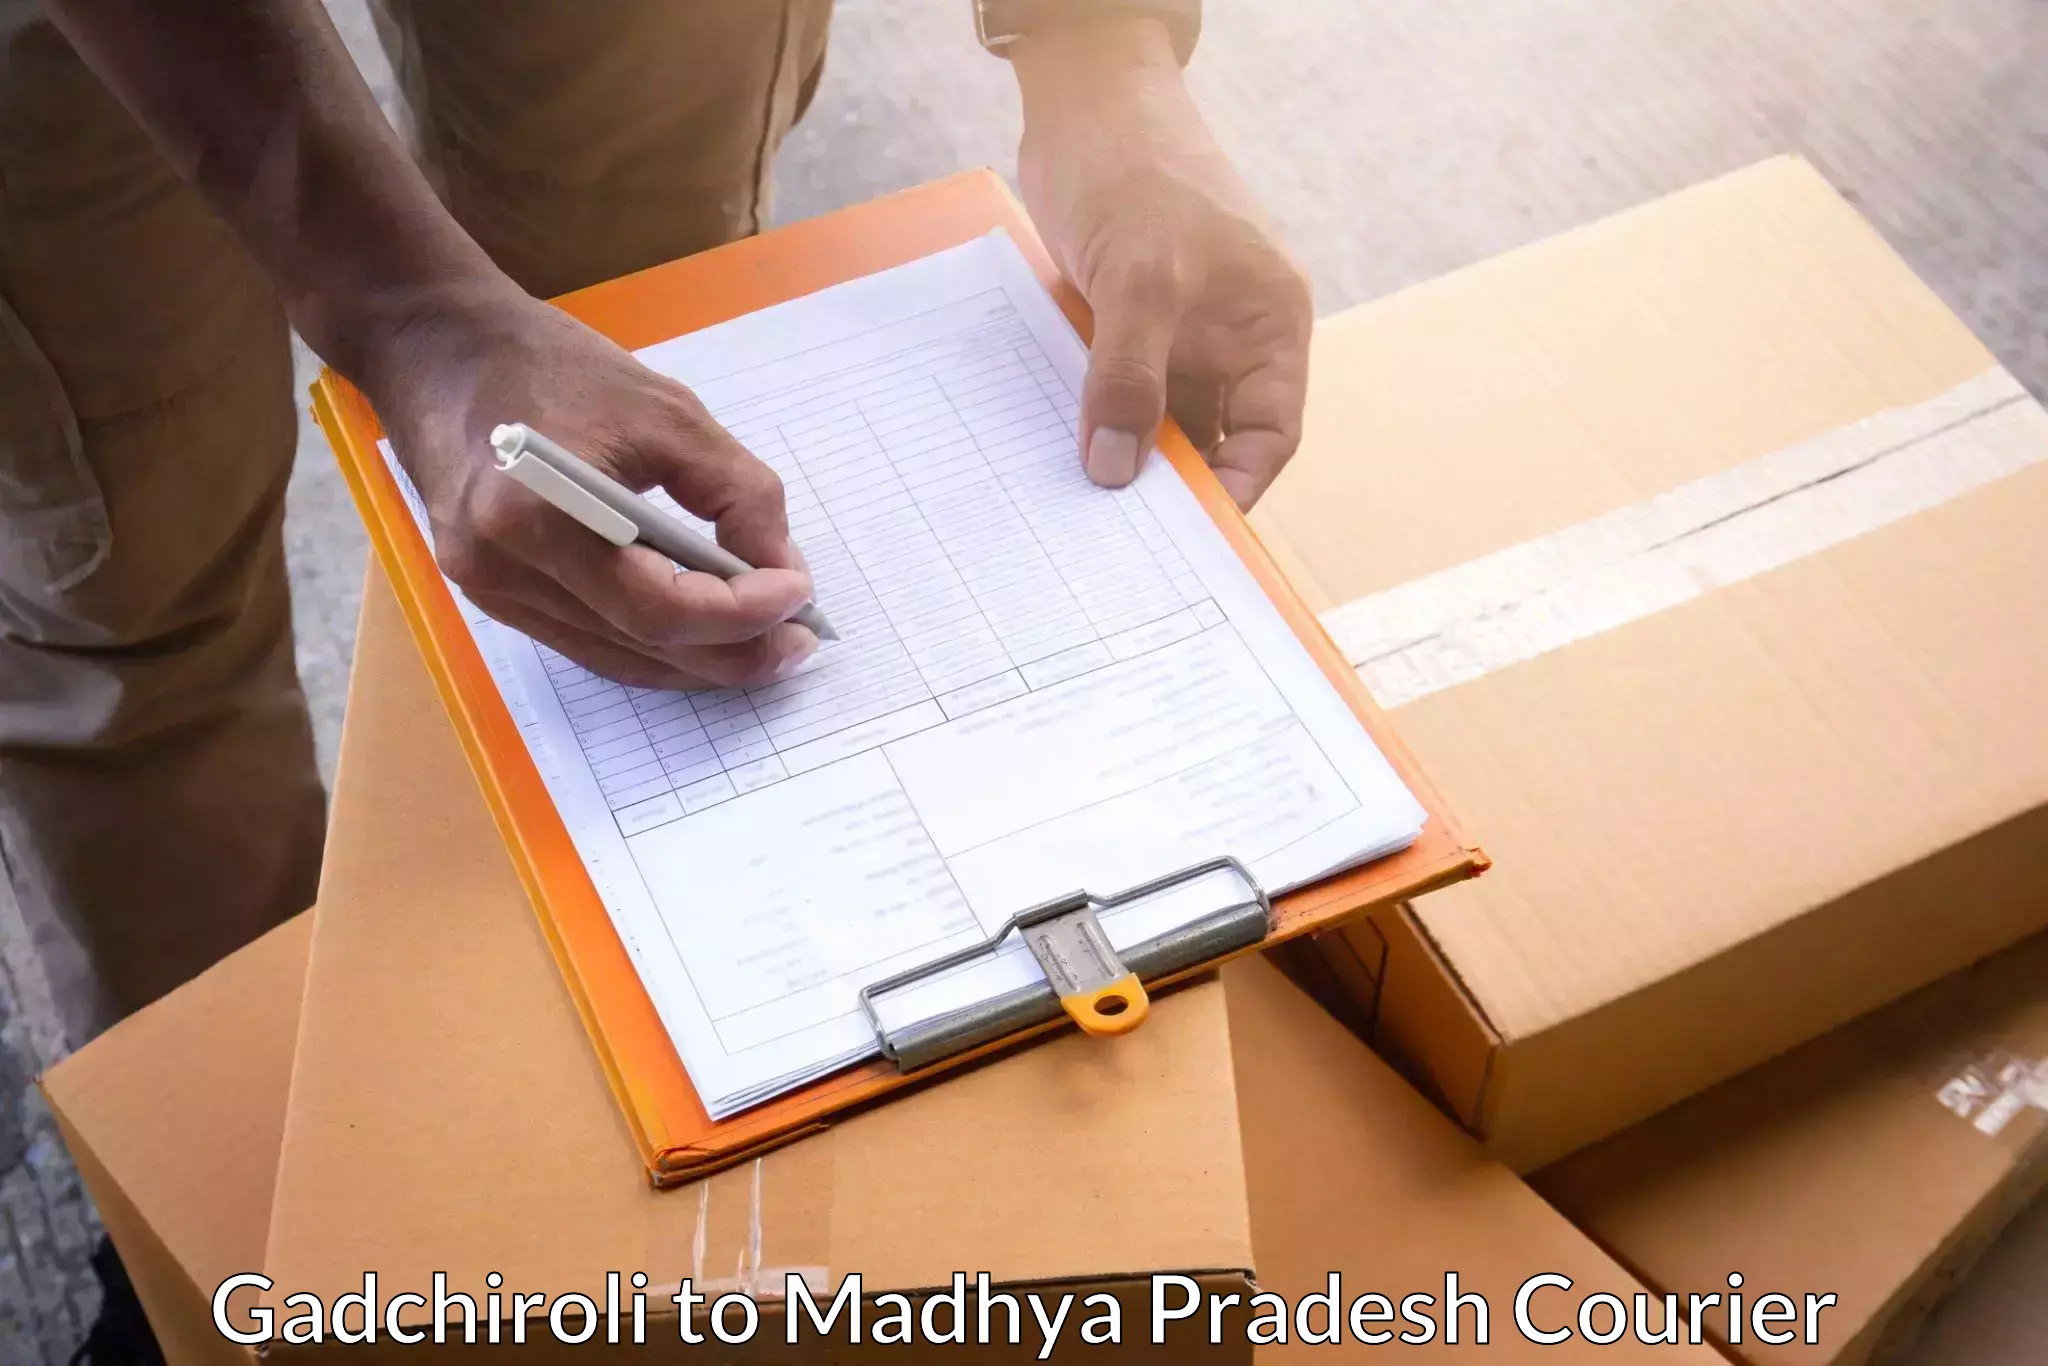 Urgent courier needs Gadchiroli to Sehore